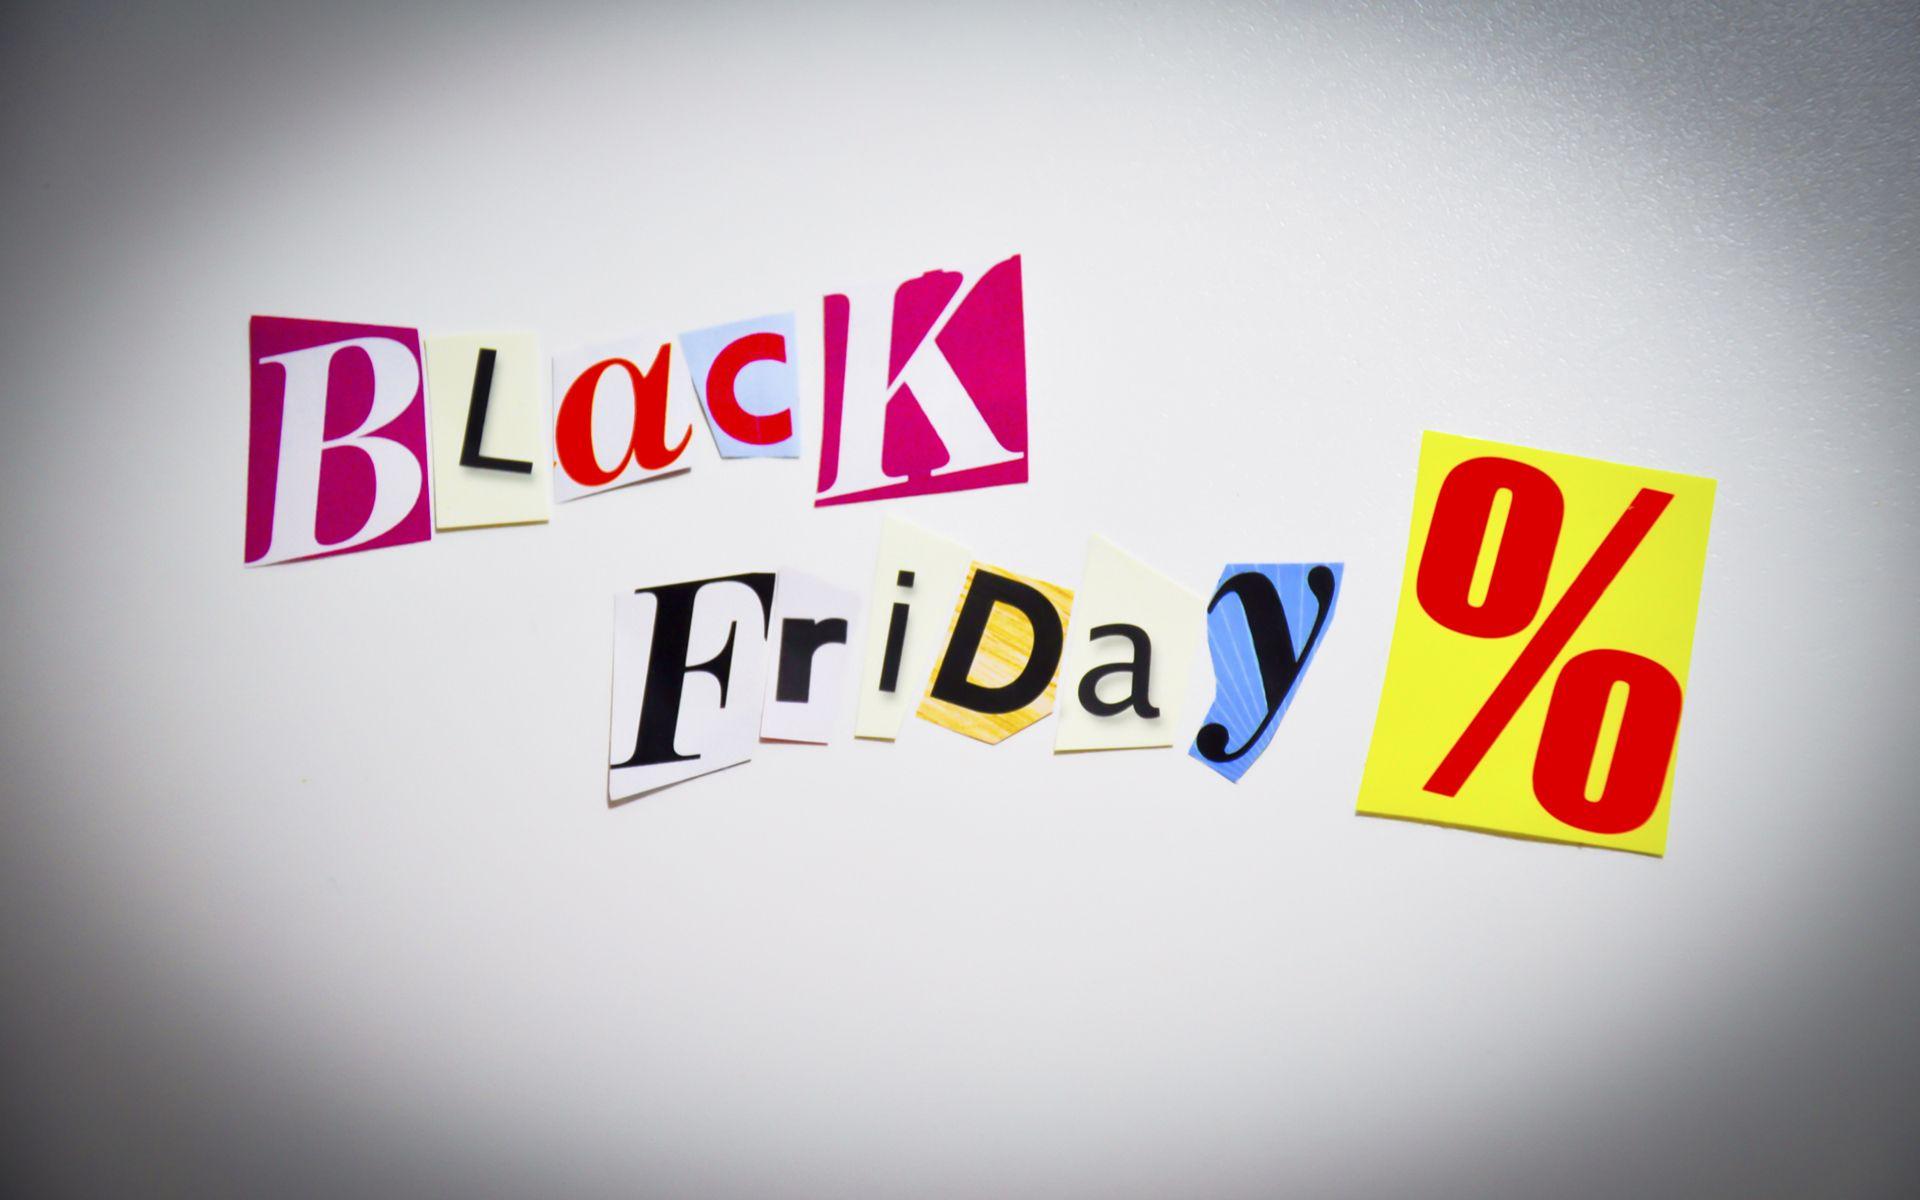 100 Best Black Friday Images for Free HD  Pixabay